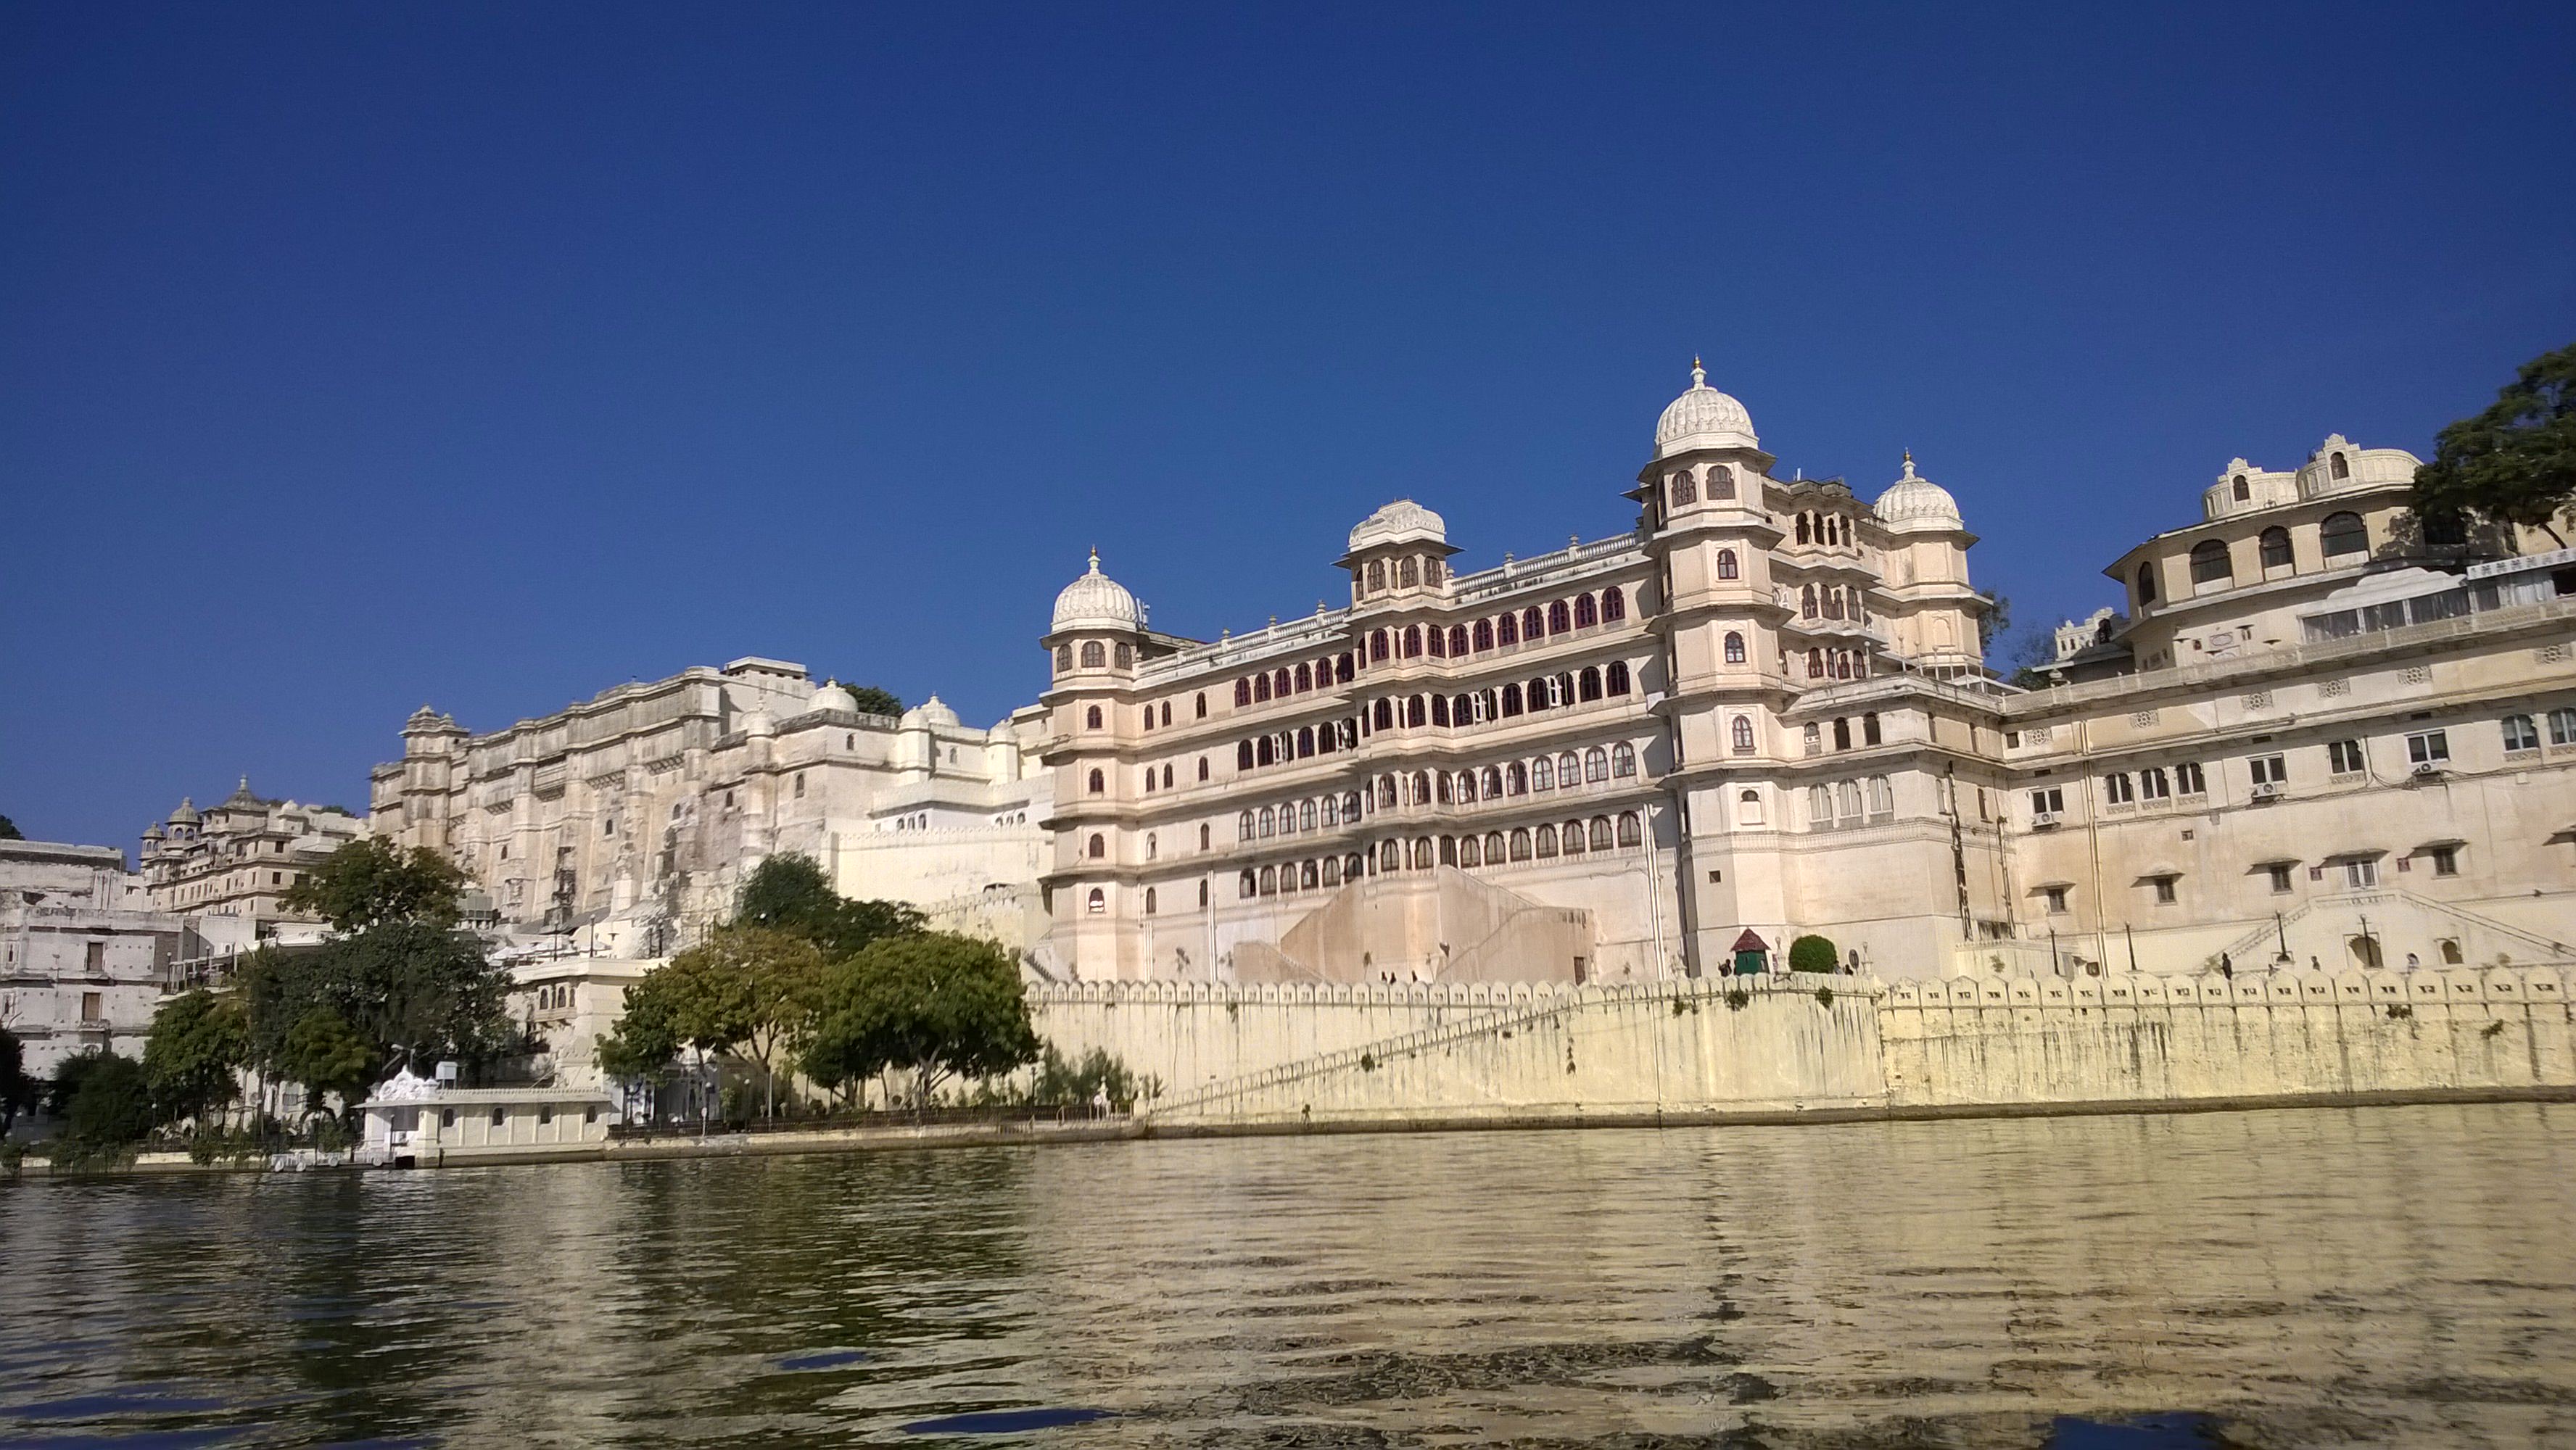 The Palace - Udaipur India